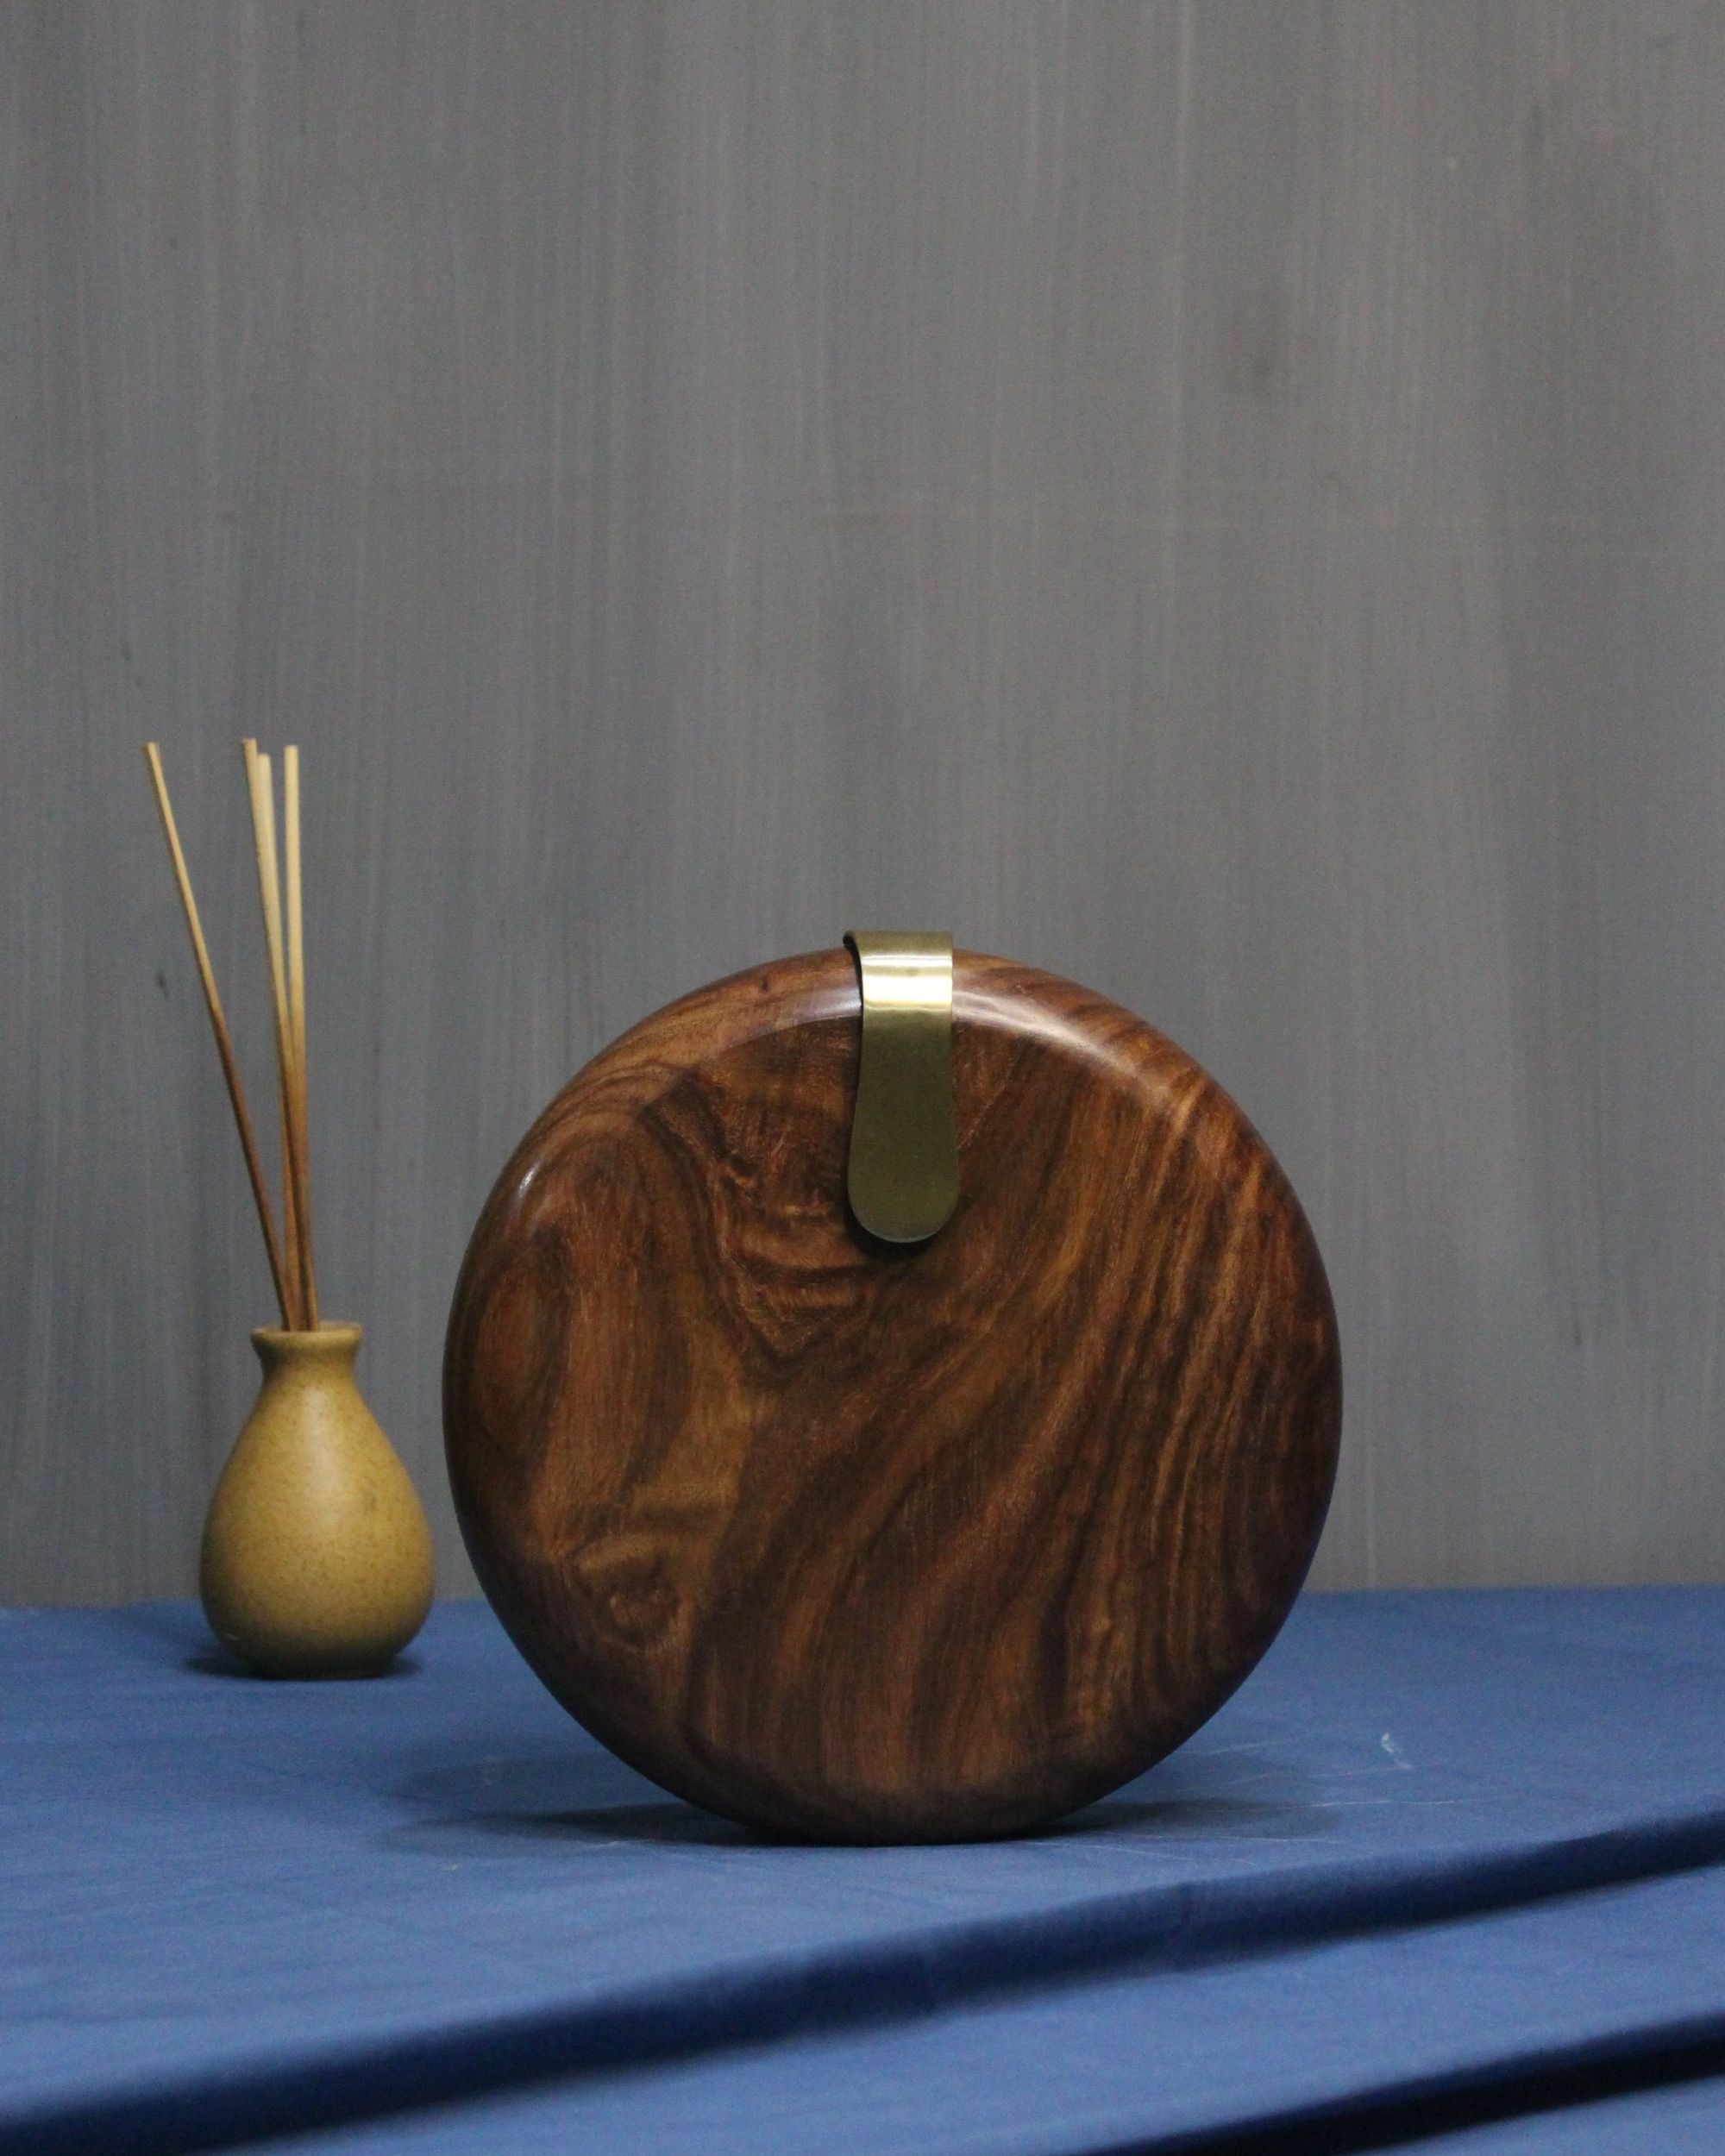 Buy Unique Wooden Clutch | Wooden Purse | Clutch | Purse Online at Best  Prices in India - JioMart.